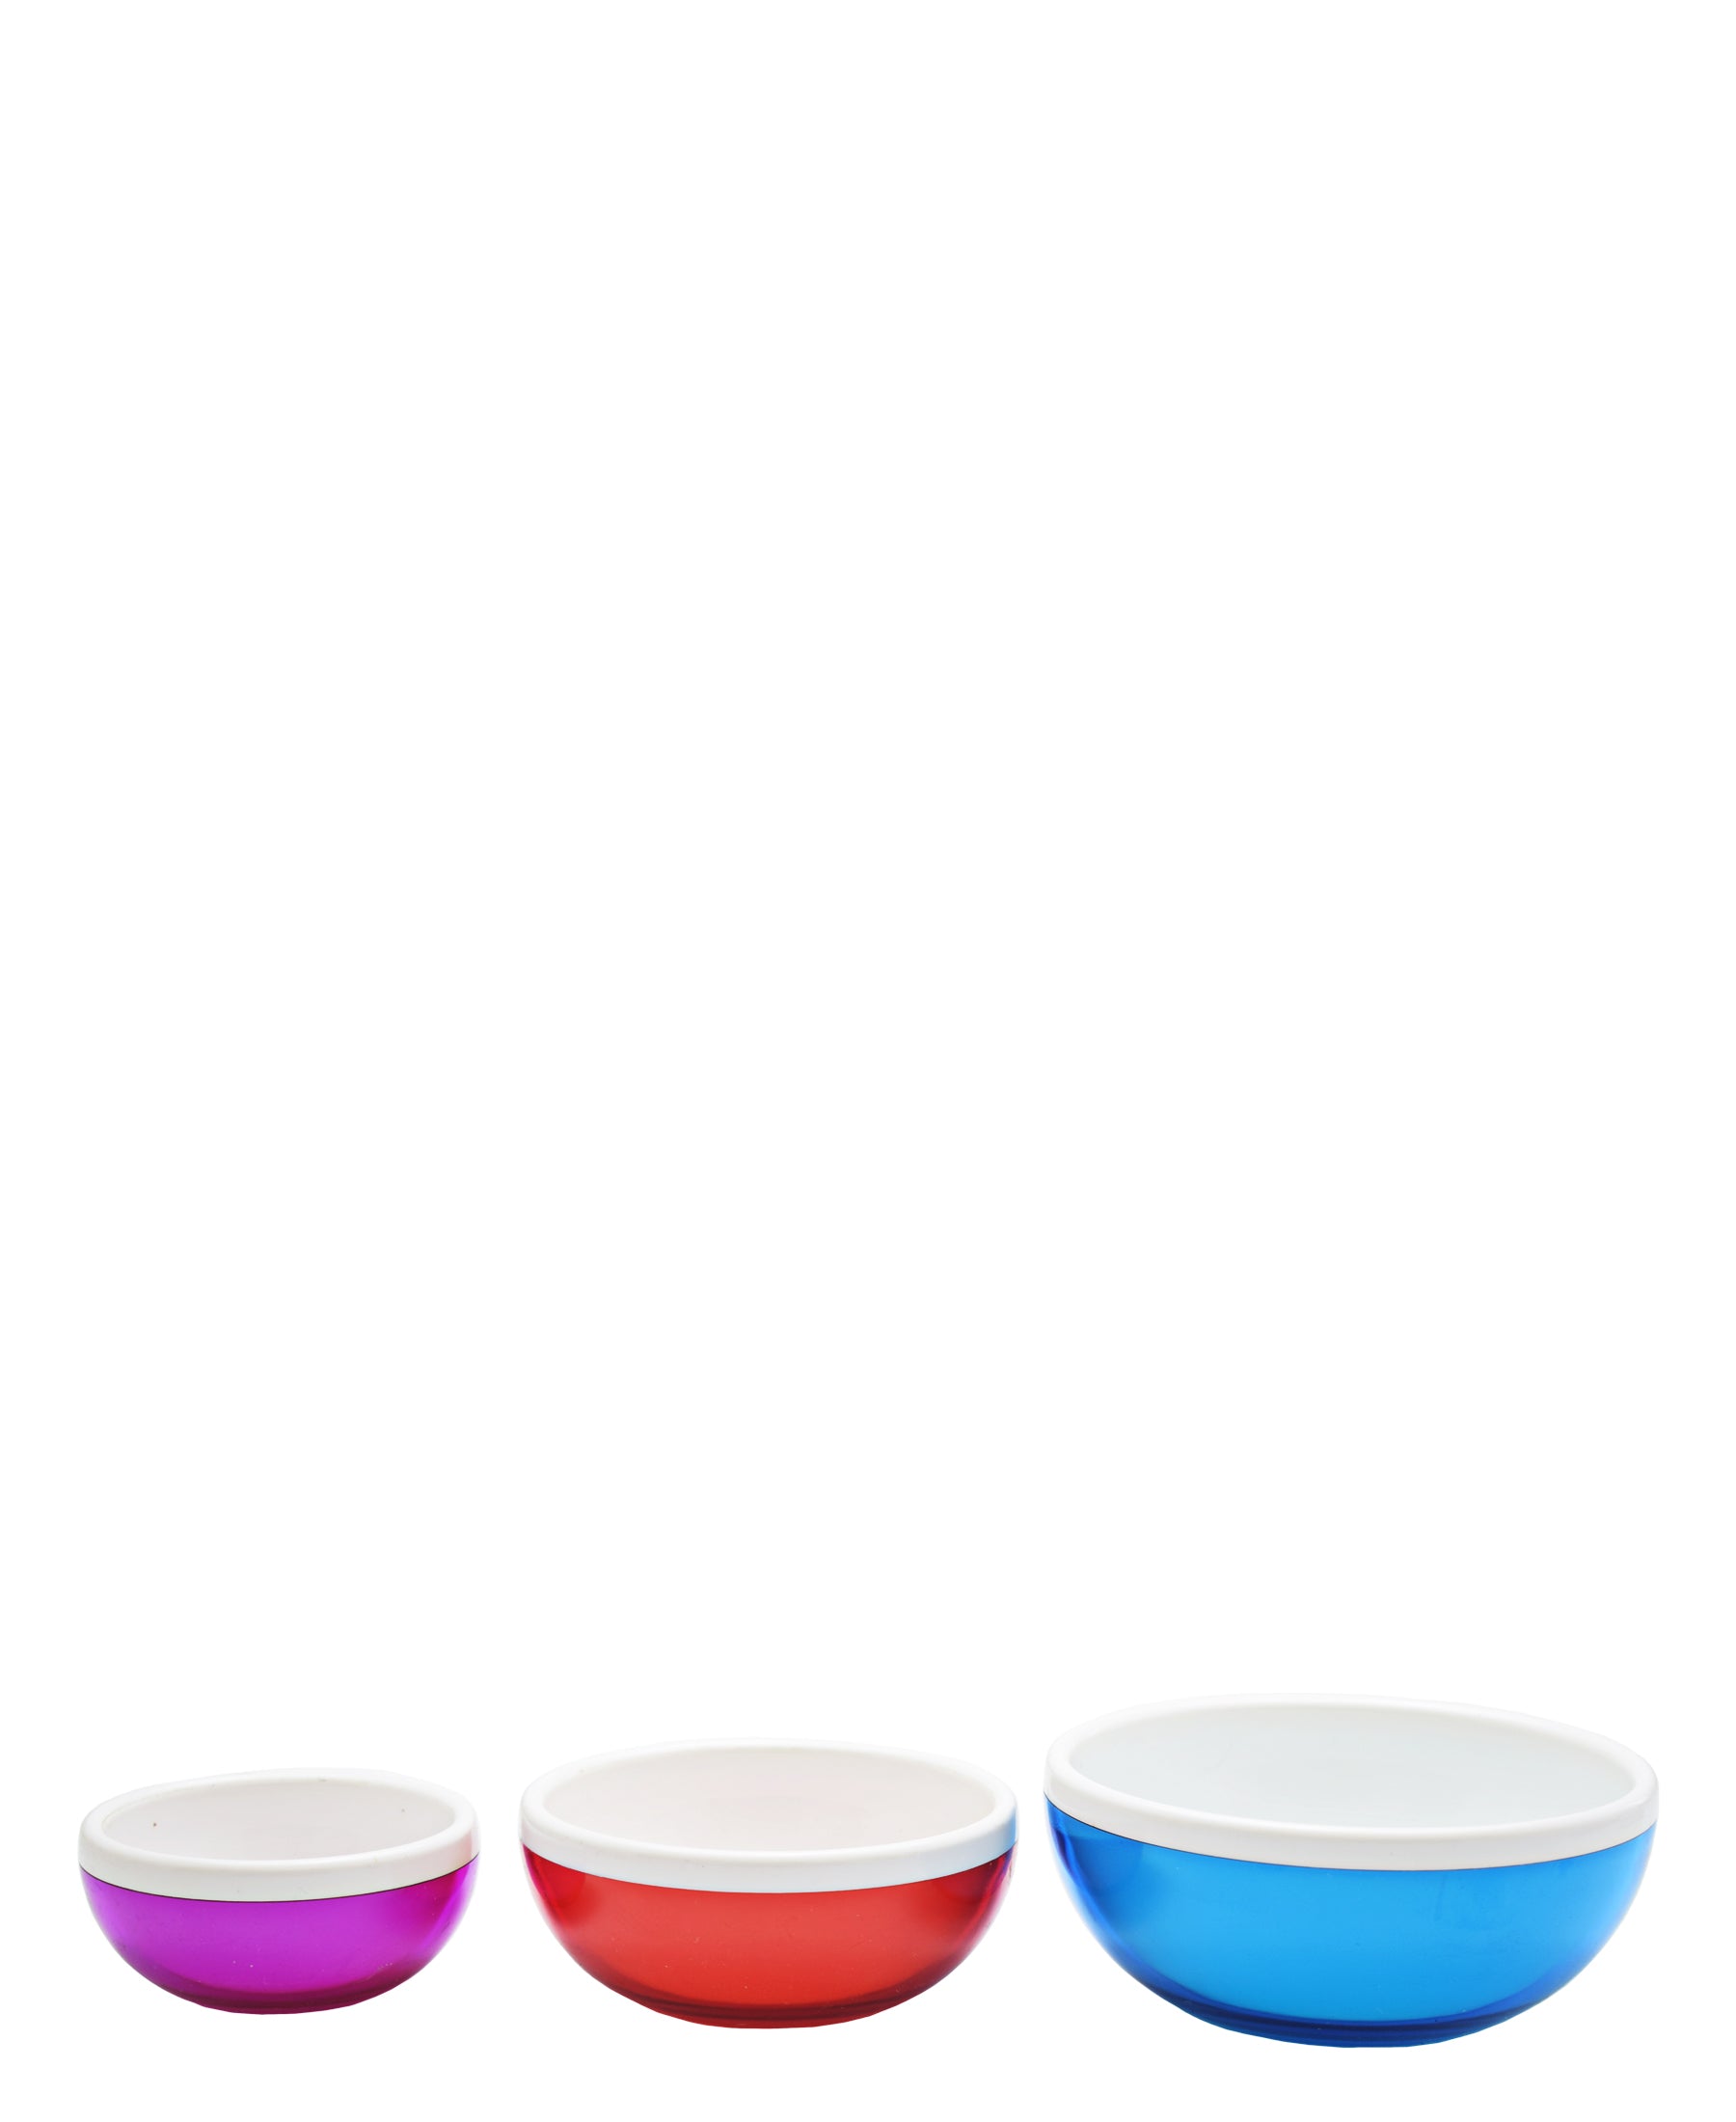 Prep & Serve Bowl 3 Piece - Pink, Red & Blue